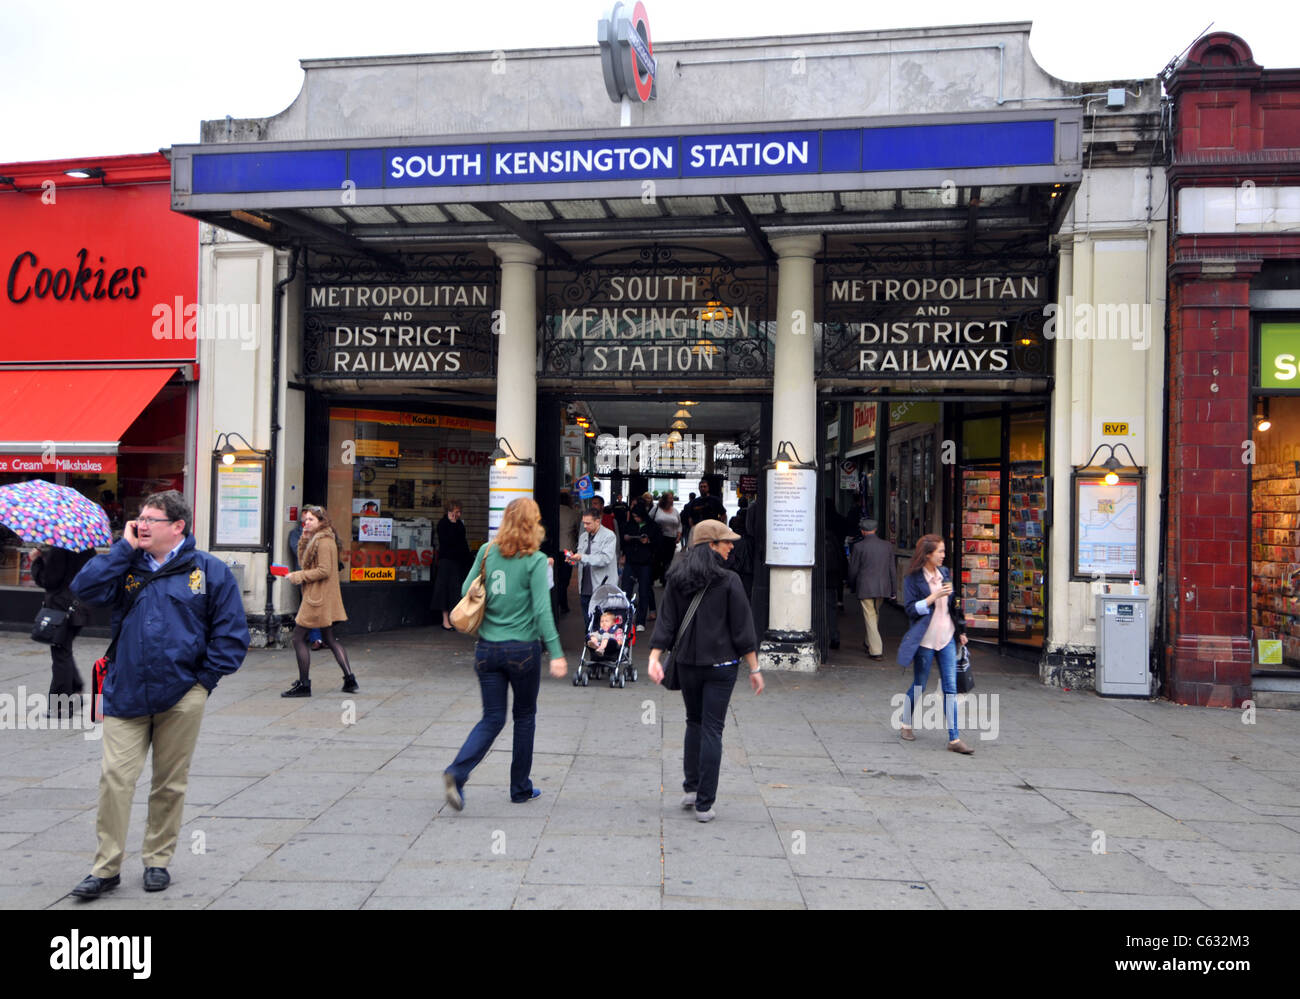 South Kensington Station, London, England, UK Stockfoto